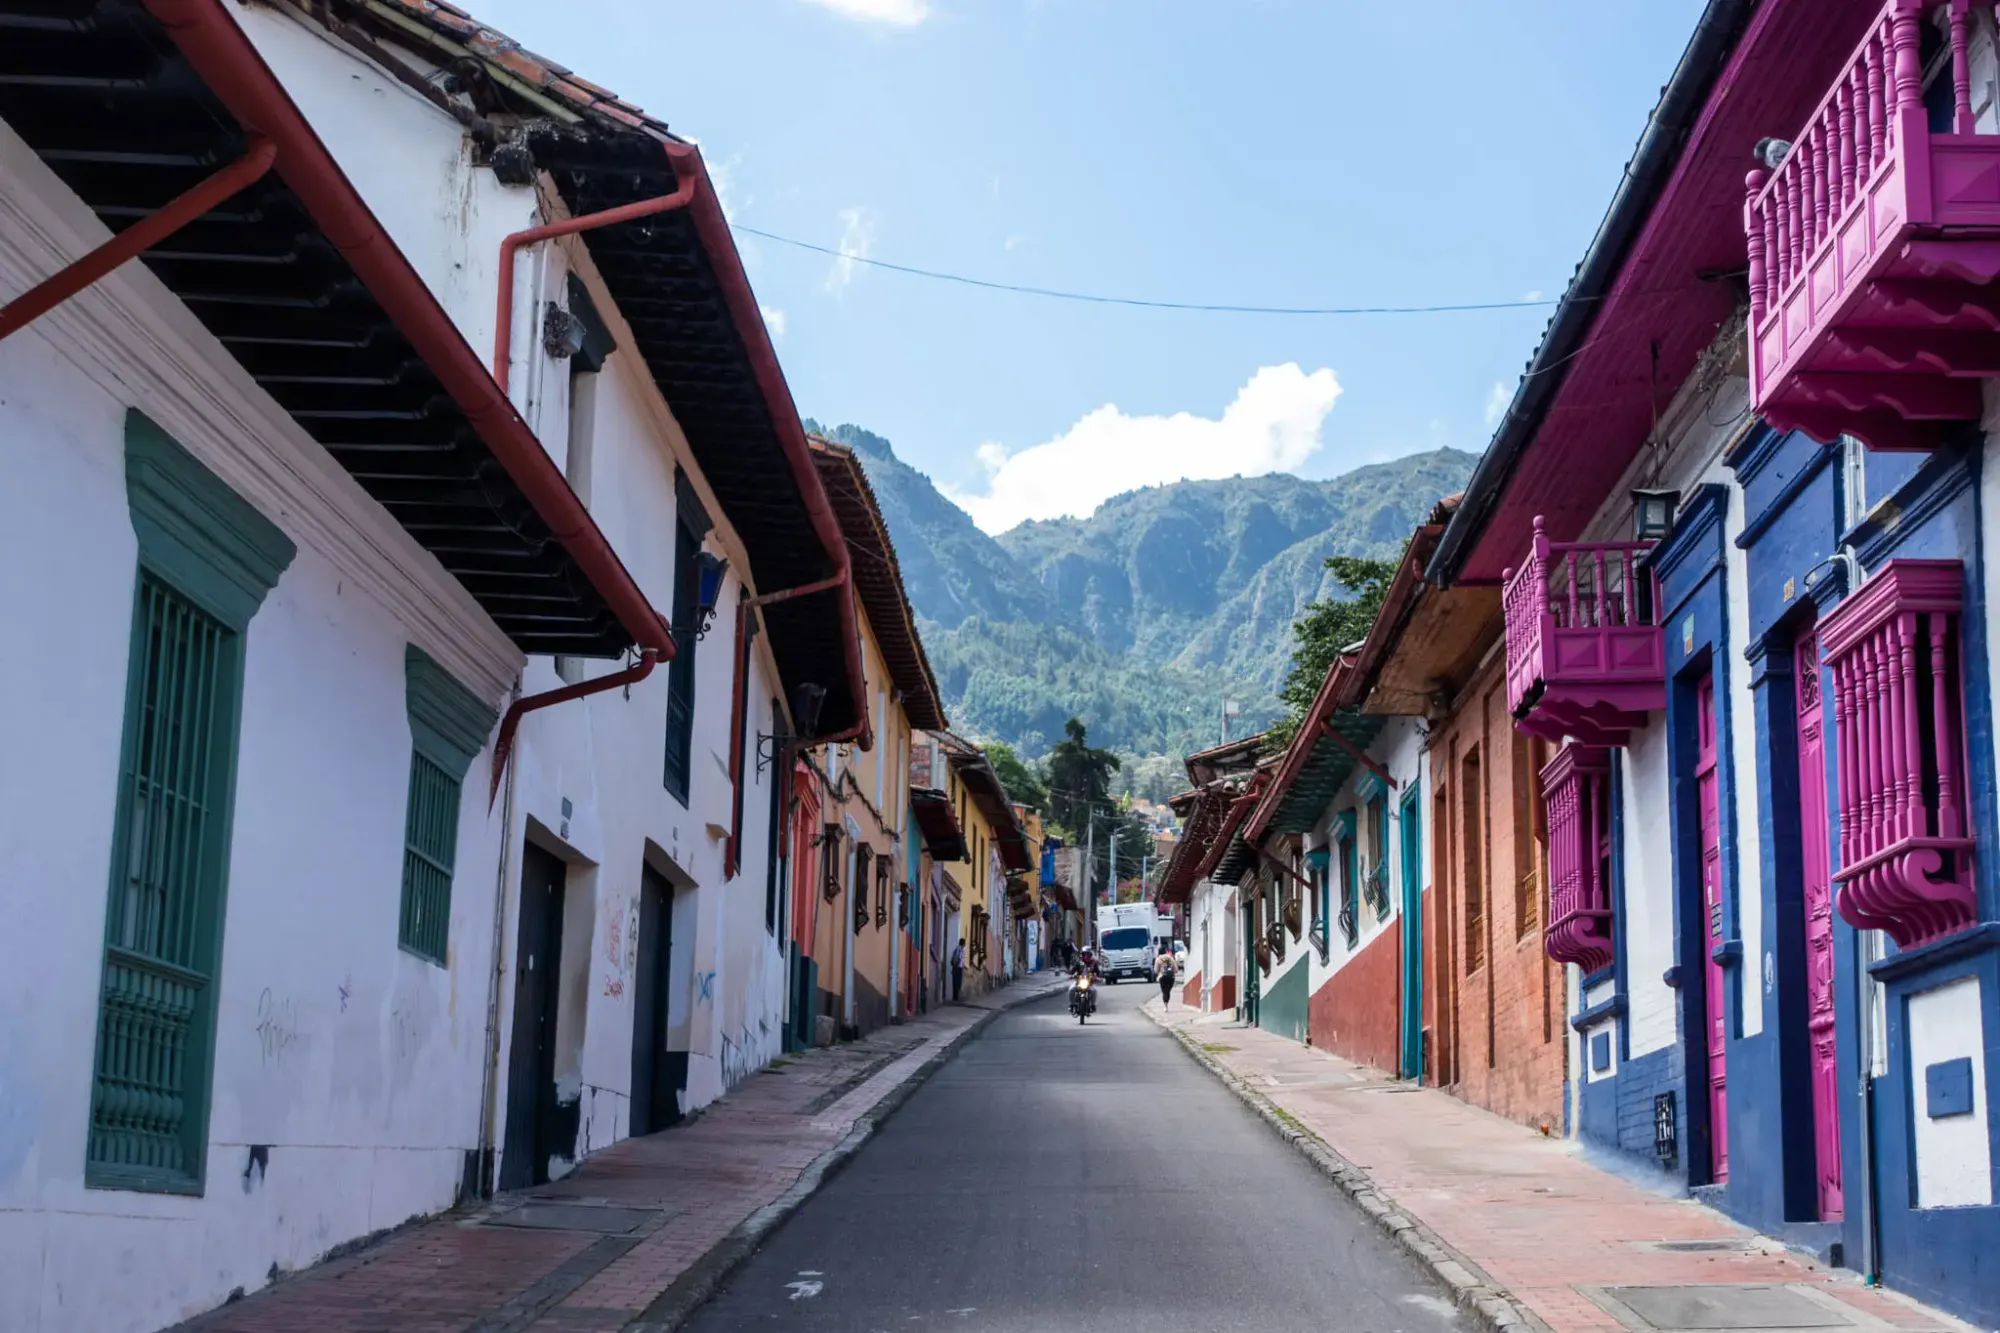 The streets of La Candelaria, Bogotá